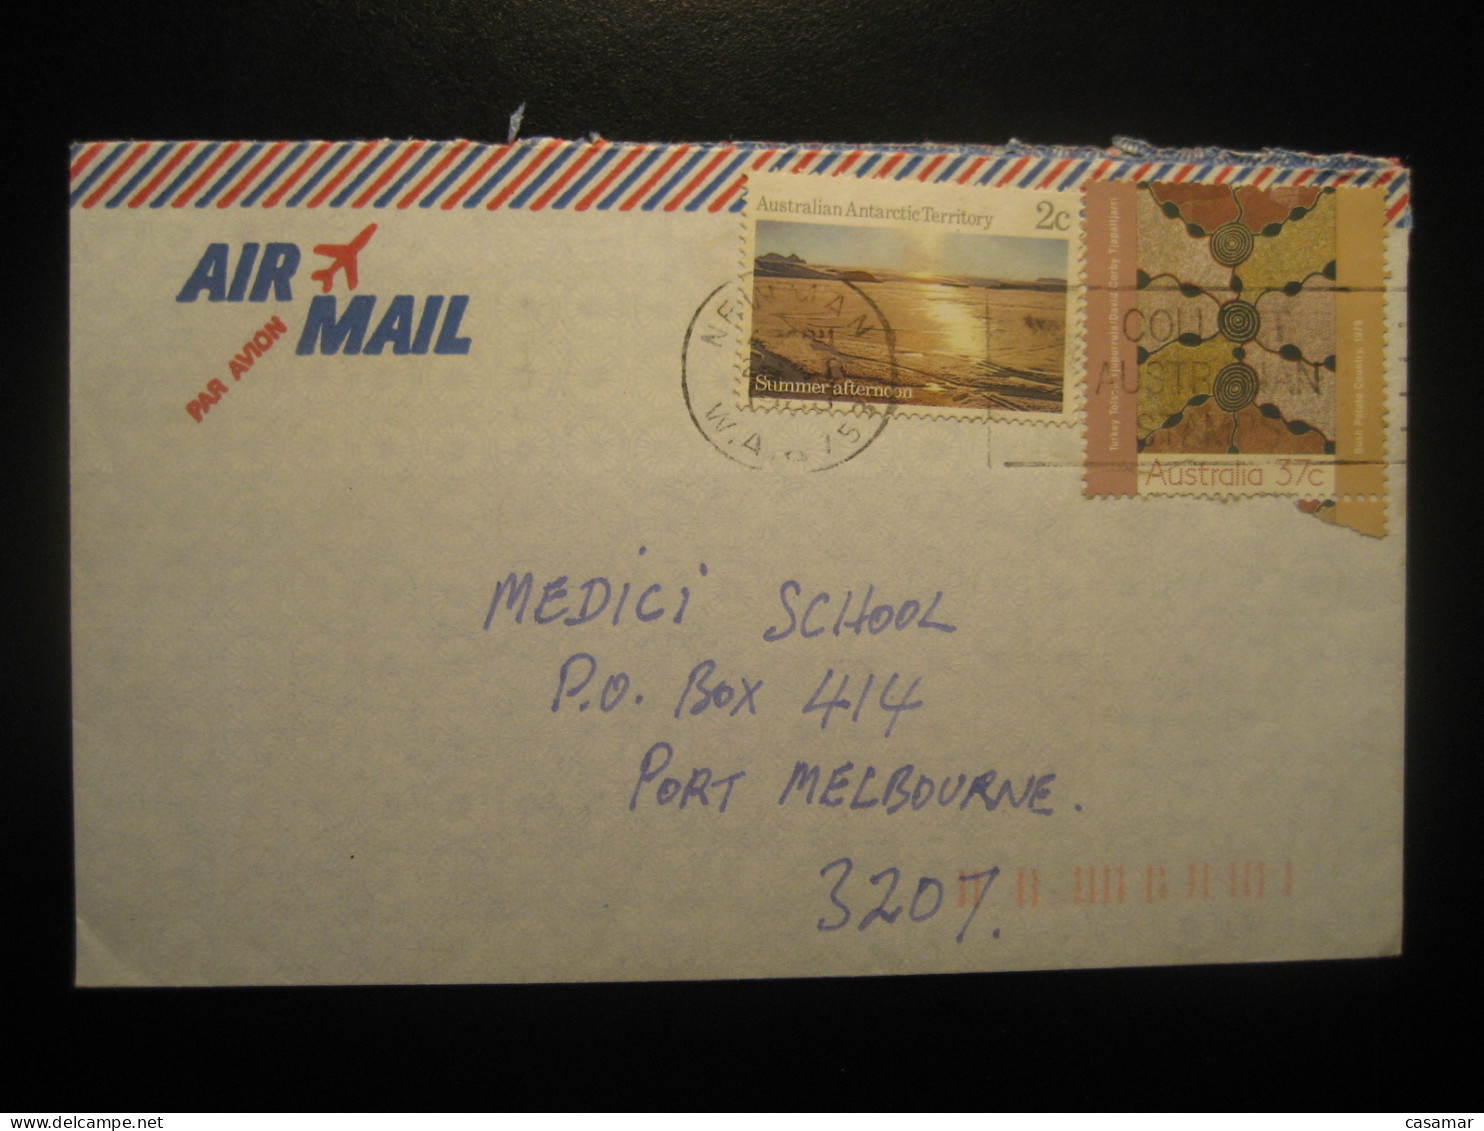 NEWMAN 198? Summer Afternoon Cancel Air Mail Cover AAT Australian Antarctic Territory Antarctics Antarctica - Storia Postale